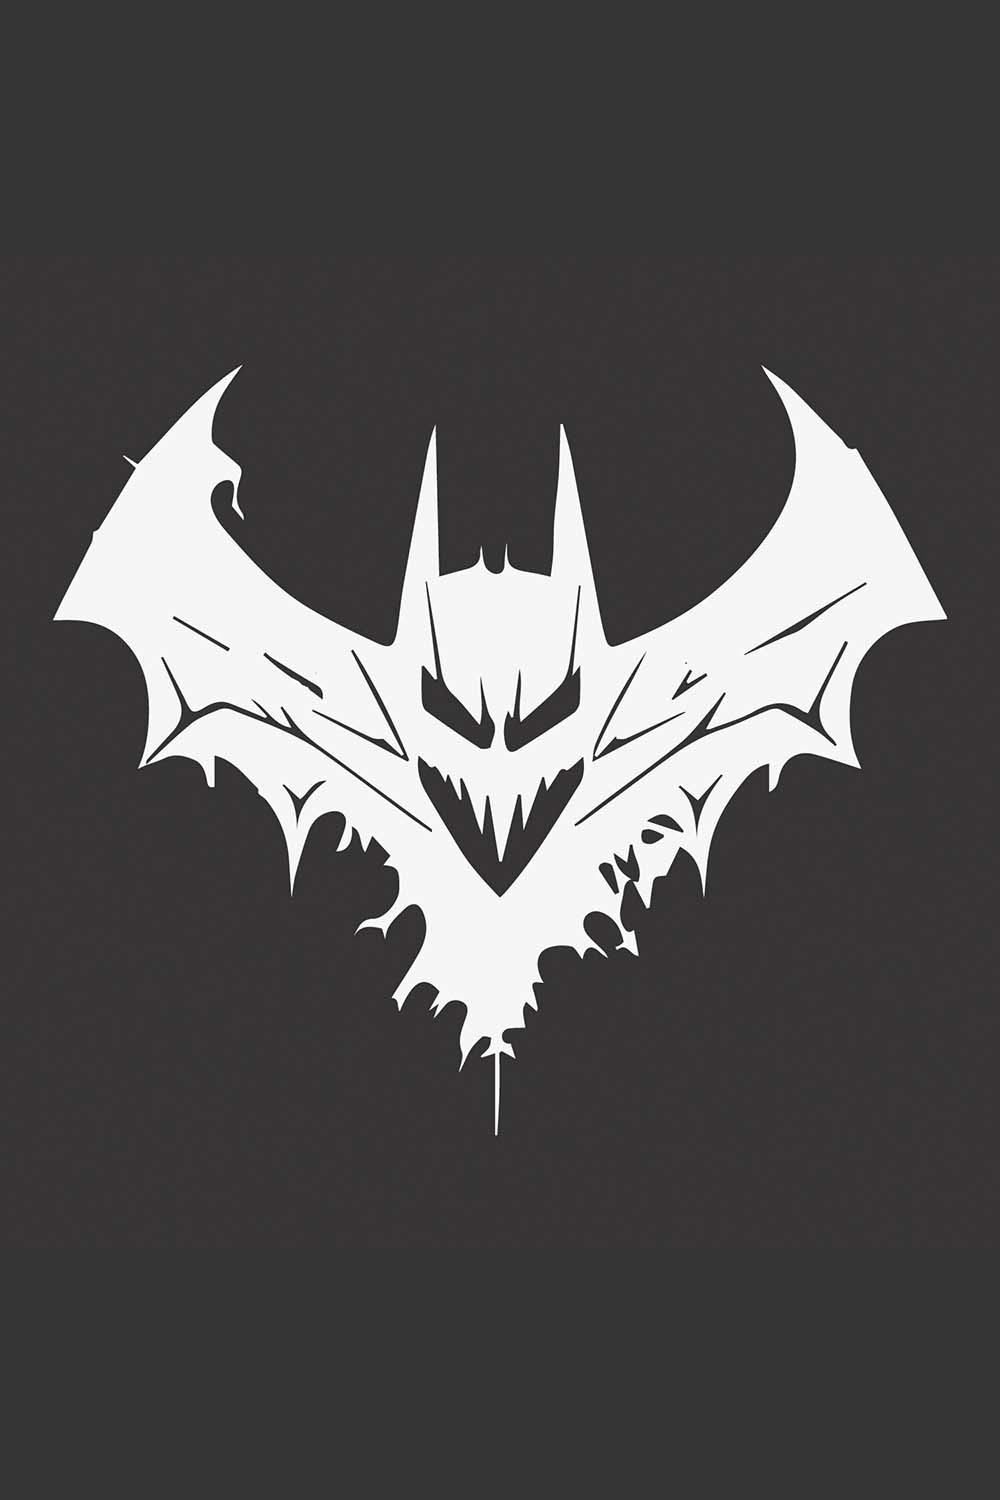 4 BatMan logo design/T-shirt design pinterest preview image.